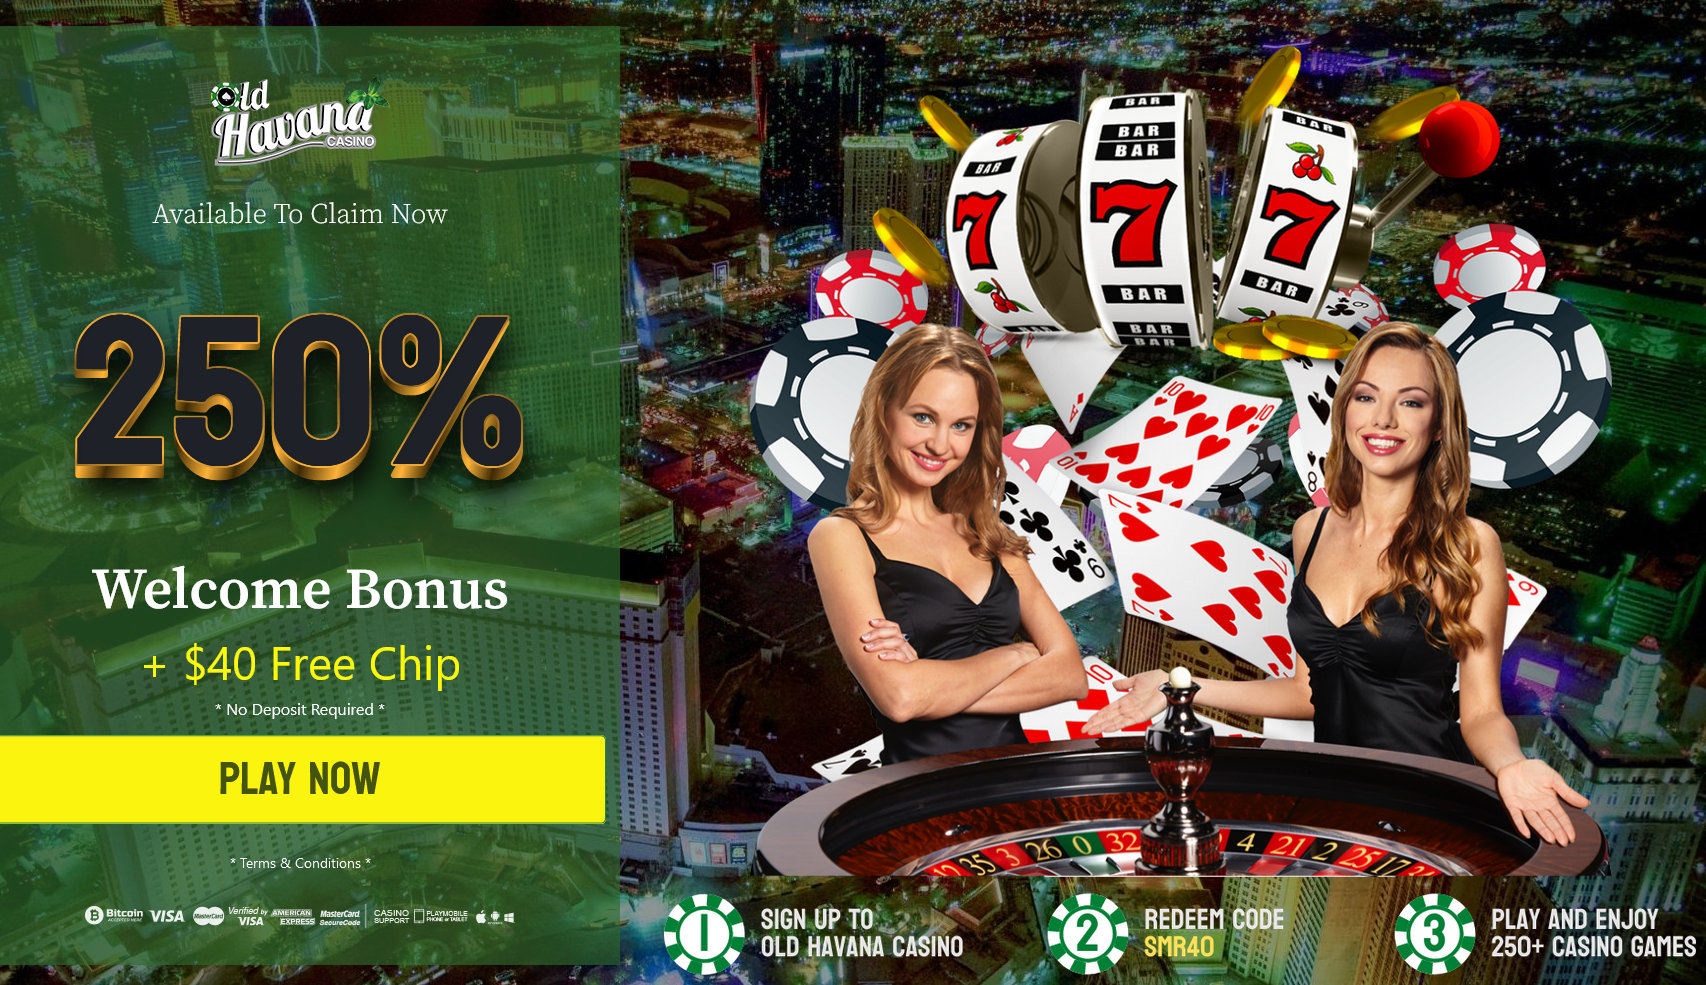 Old
                                      Havana Casino 250% WELCOME BONUS +
                                      $40 FREE CHIP